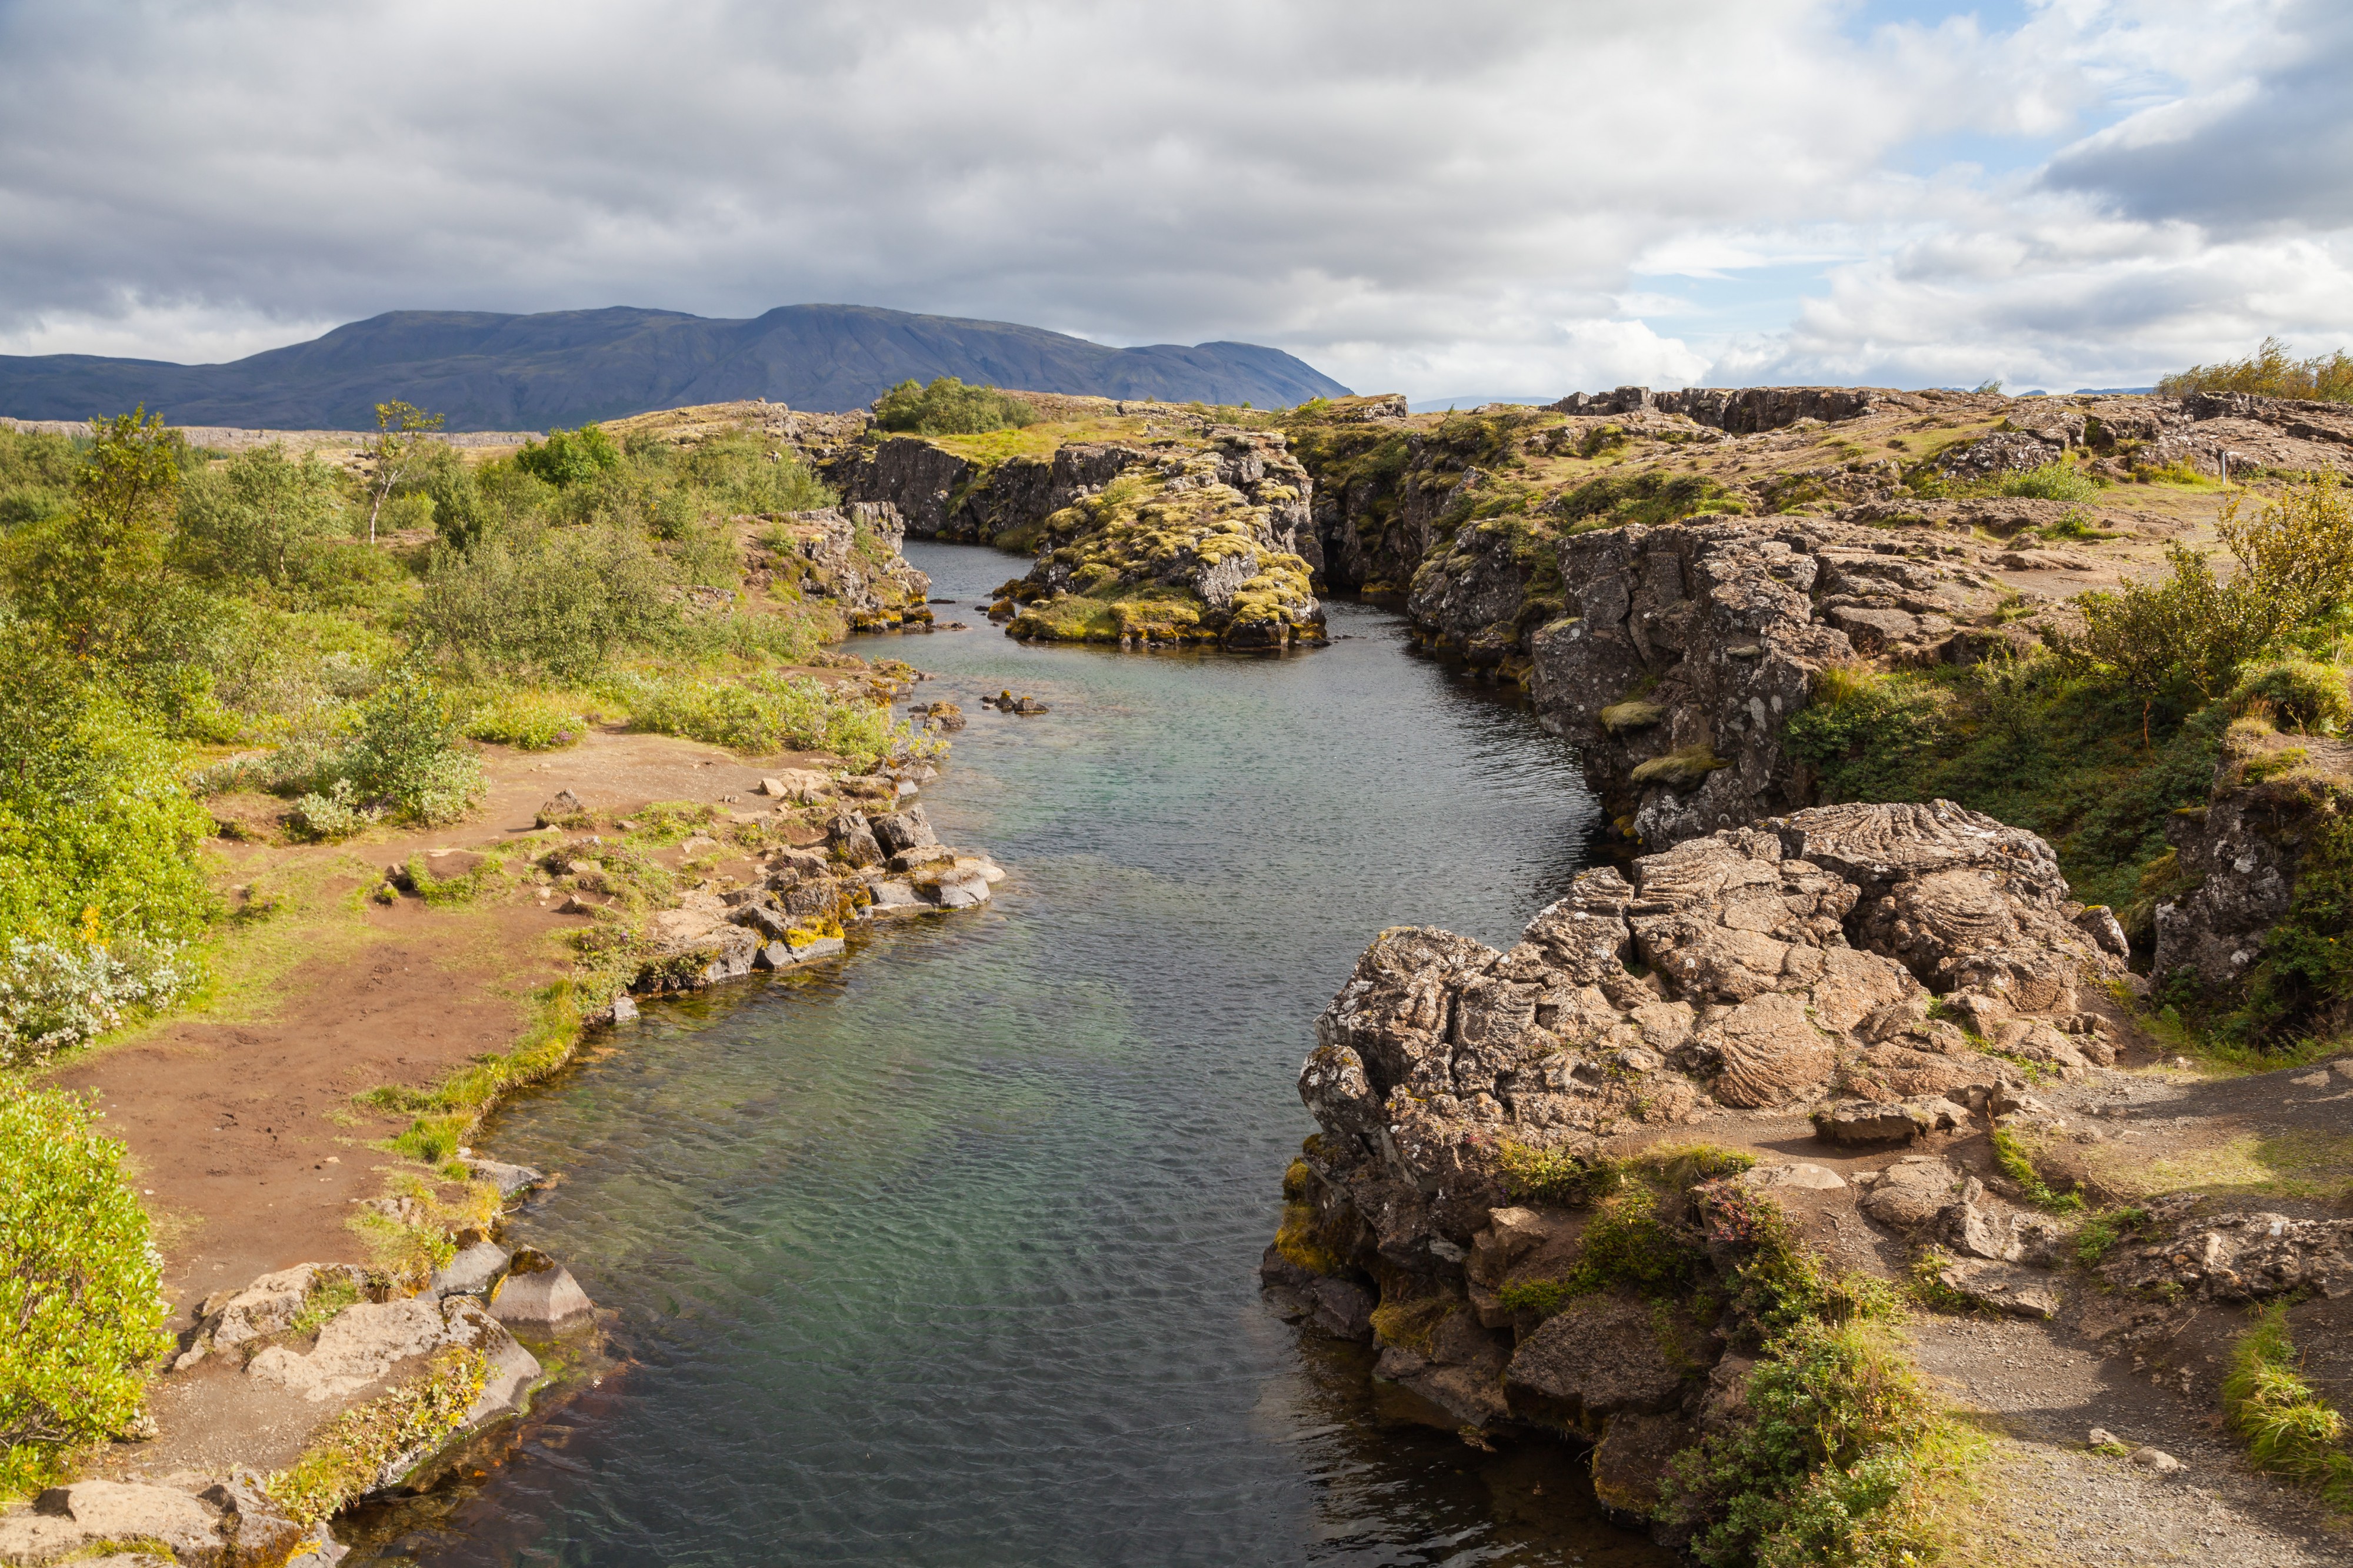 Cañón Flosagja, Parque Nacional de Þingvellir, Suðurland, Islandia, 2014-08-16, DD 040